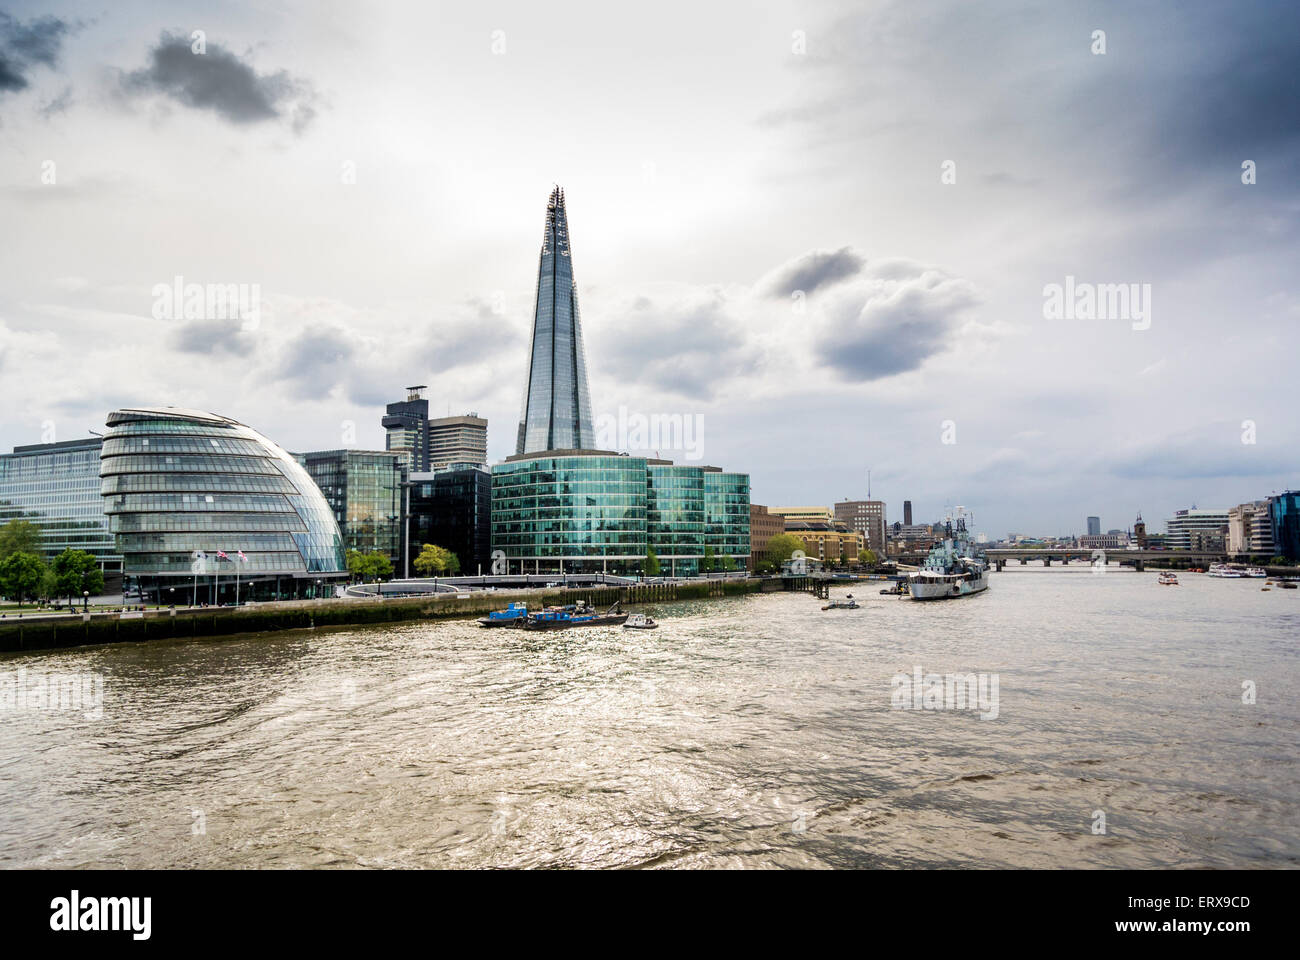 City Hall, The Shard, HMS Belfast and London Bridge on the River Thames, London, UK. Stock Photo